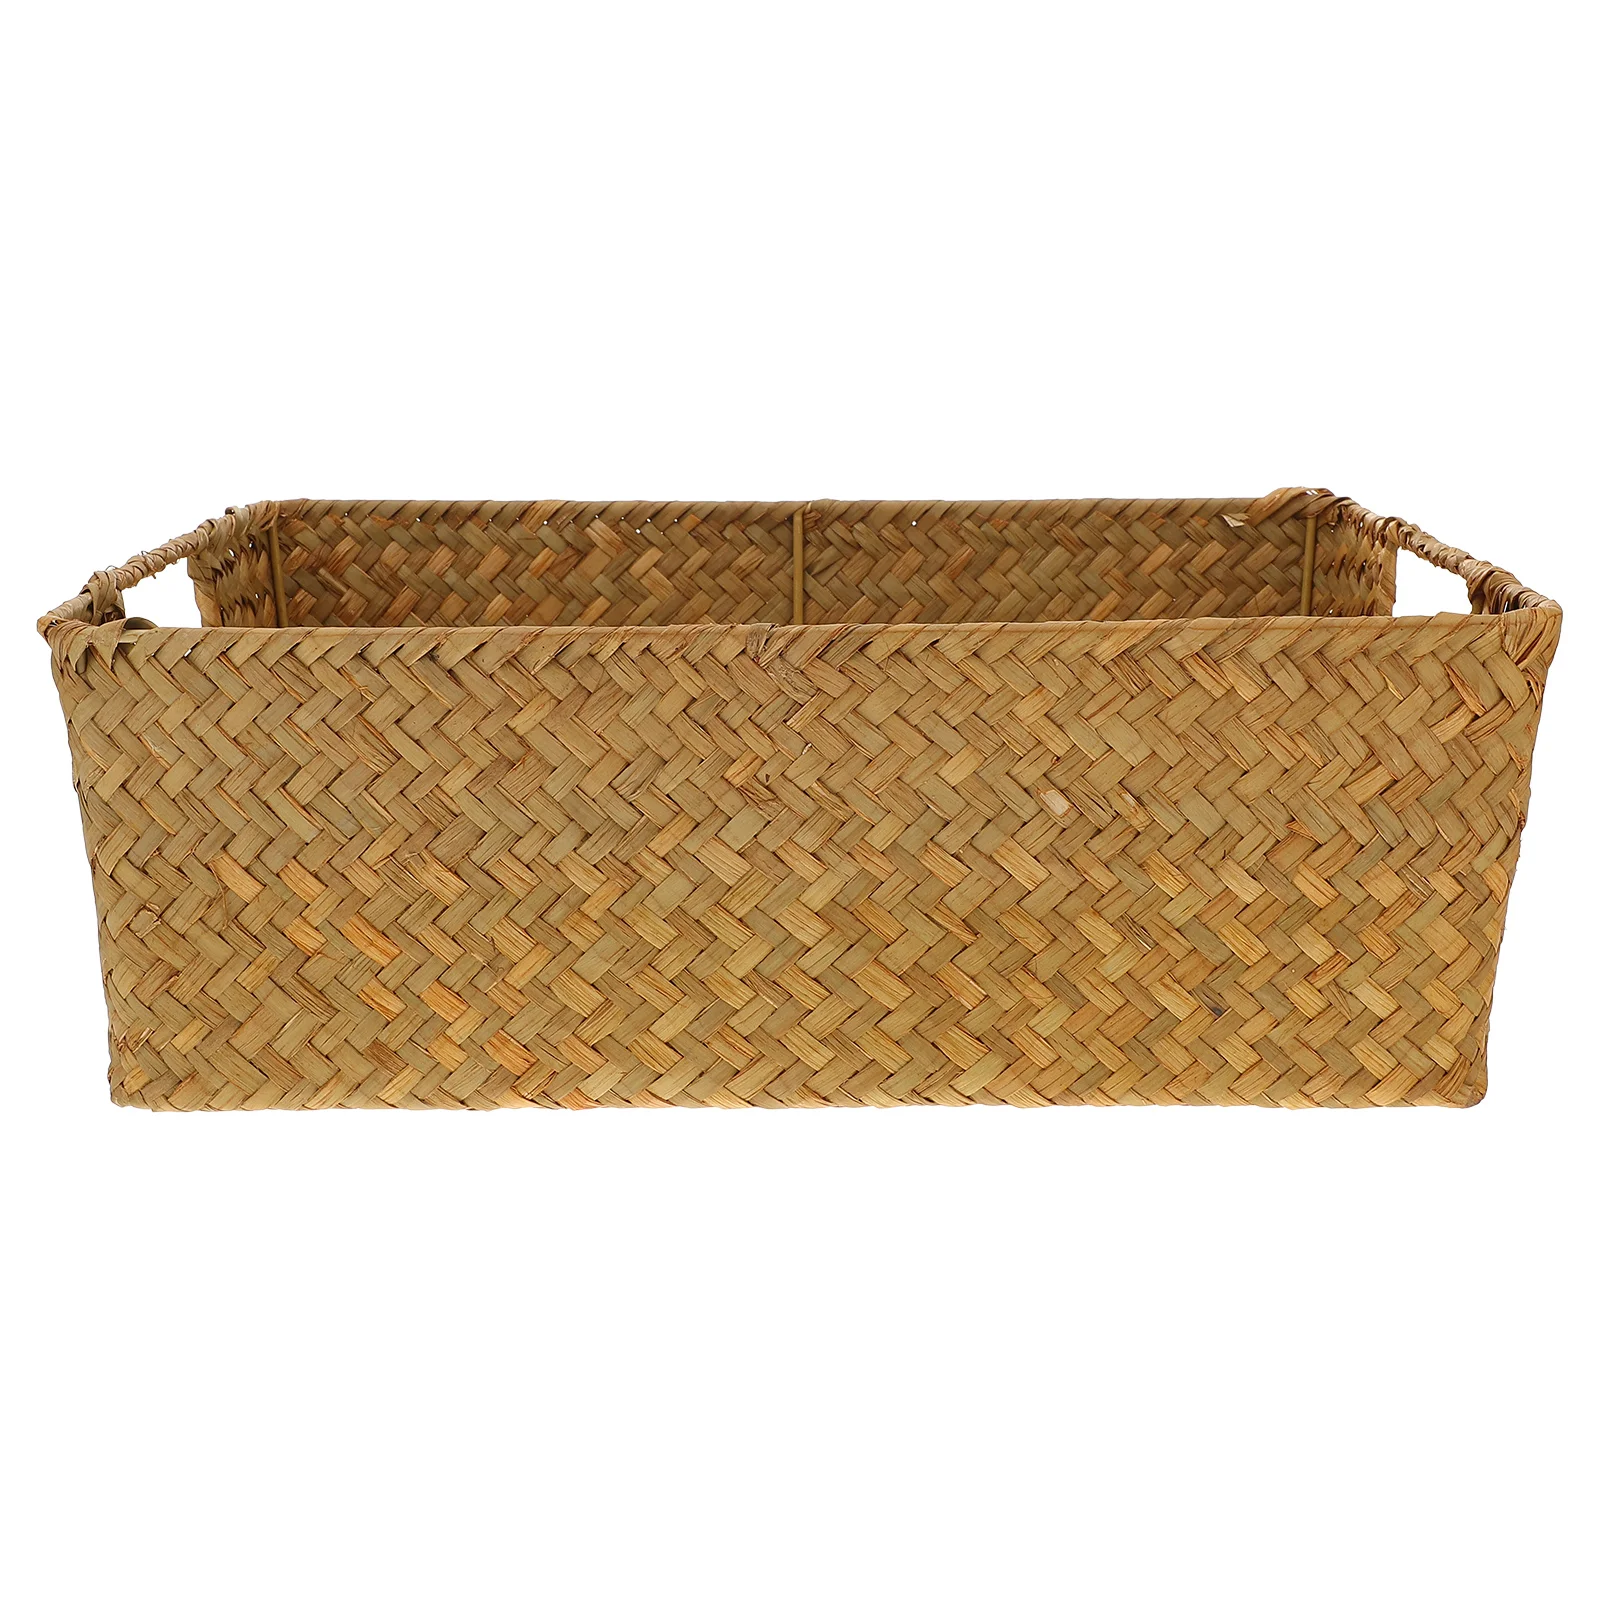 

Basket Storage Baskets Wicker Woven Seagrass Rattan Organizer Fruit Bins Food Bin Tray Hamper Serving Box Laundry Rectangular